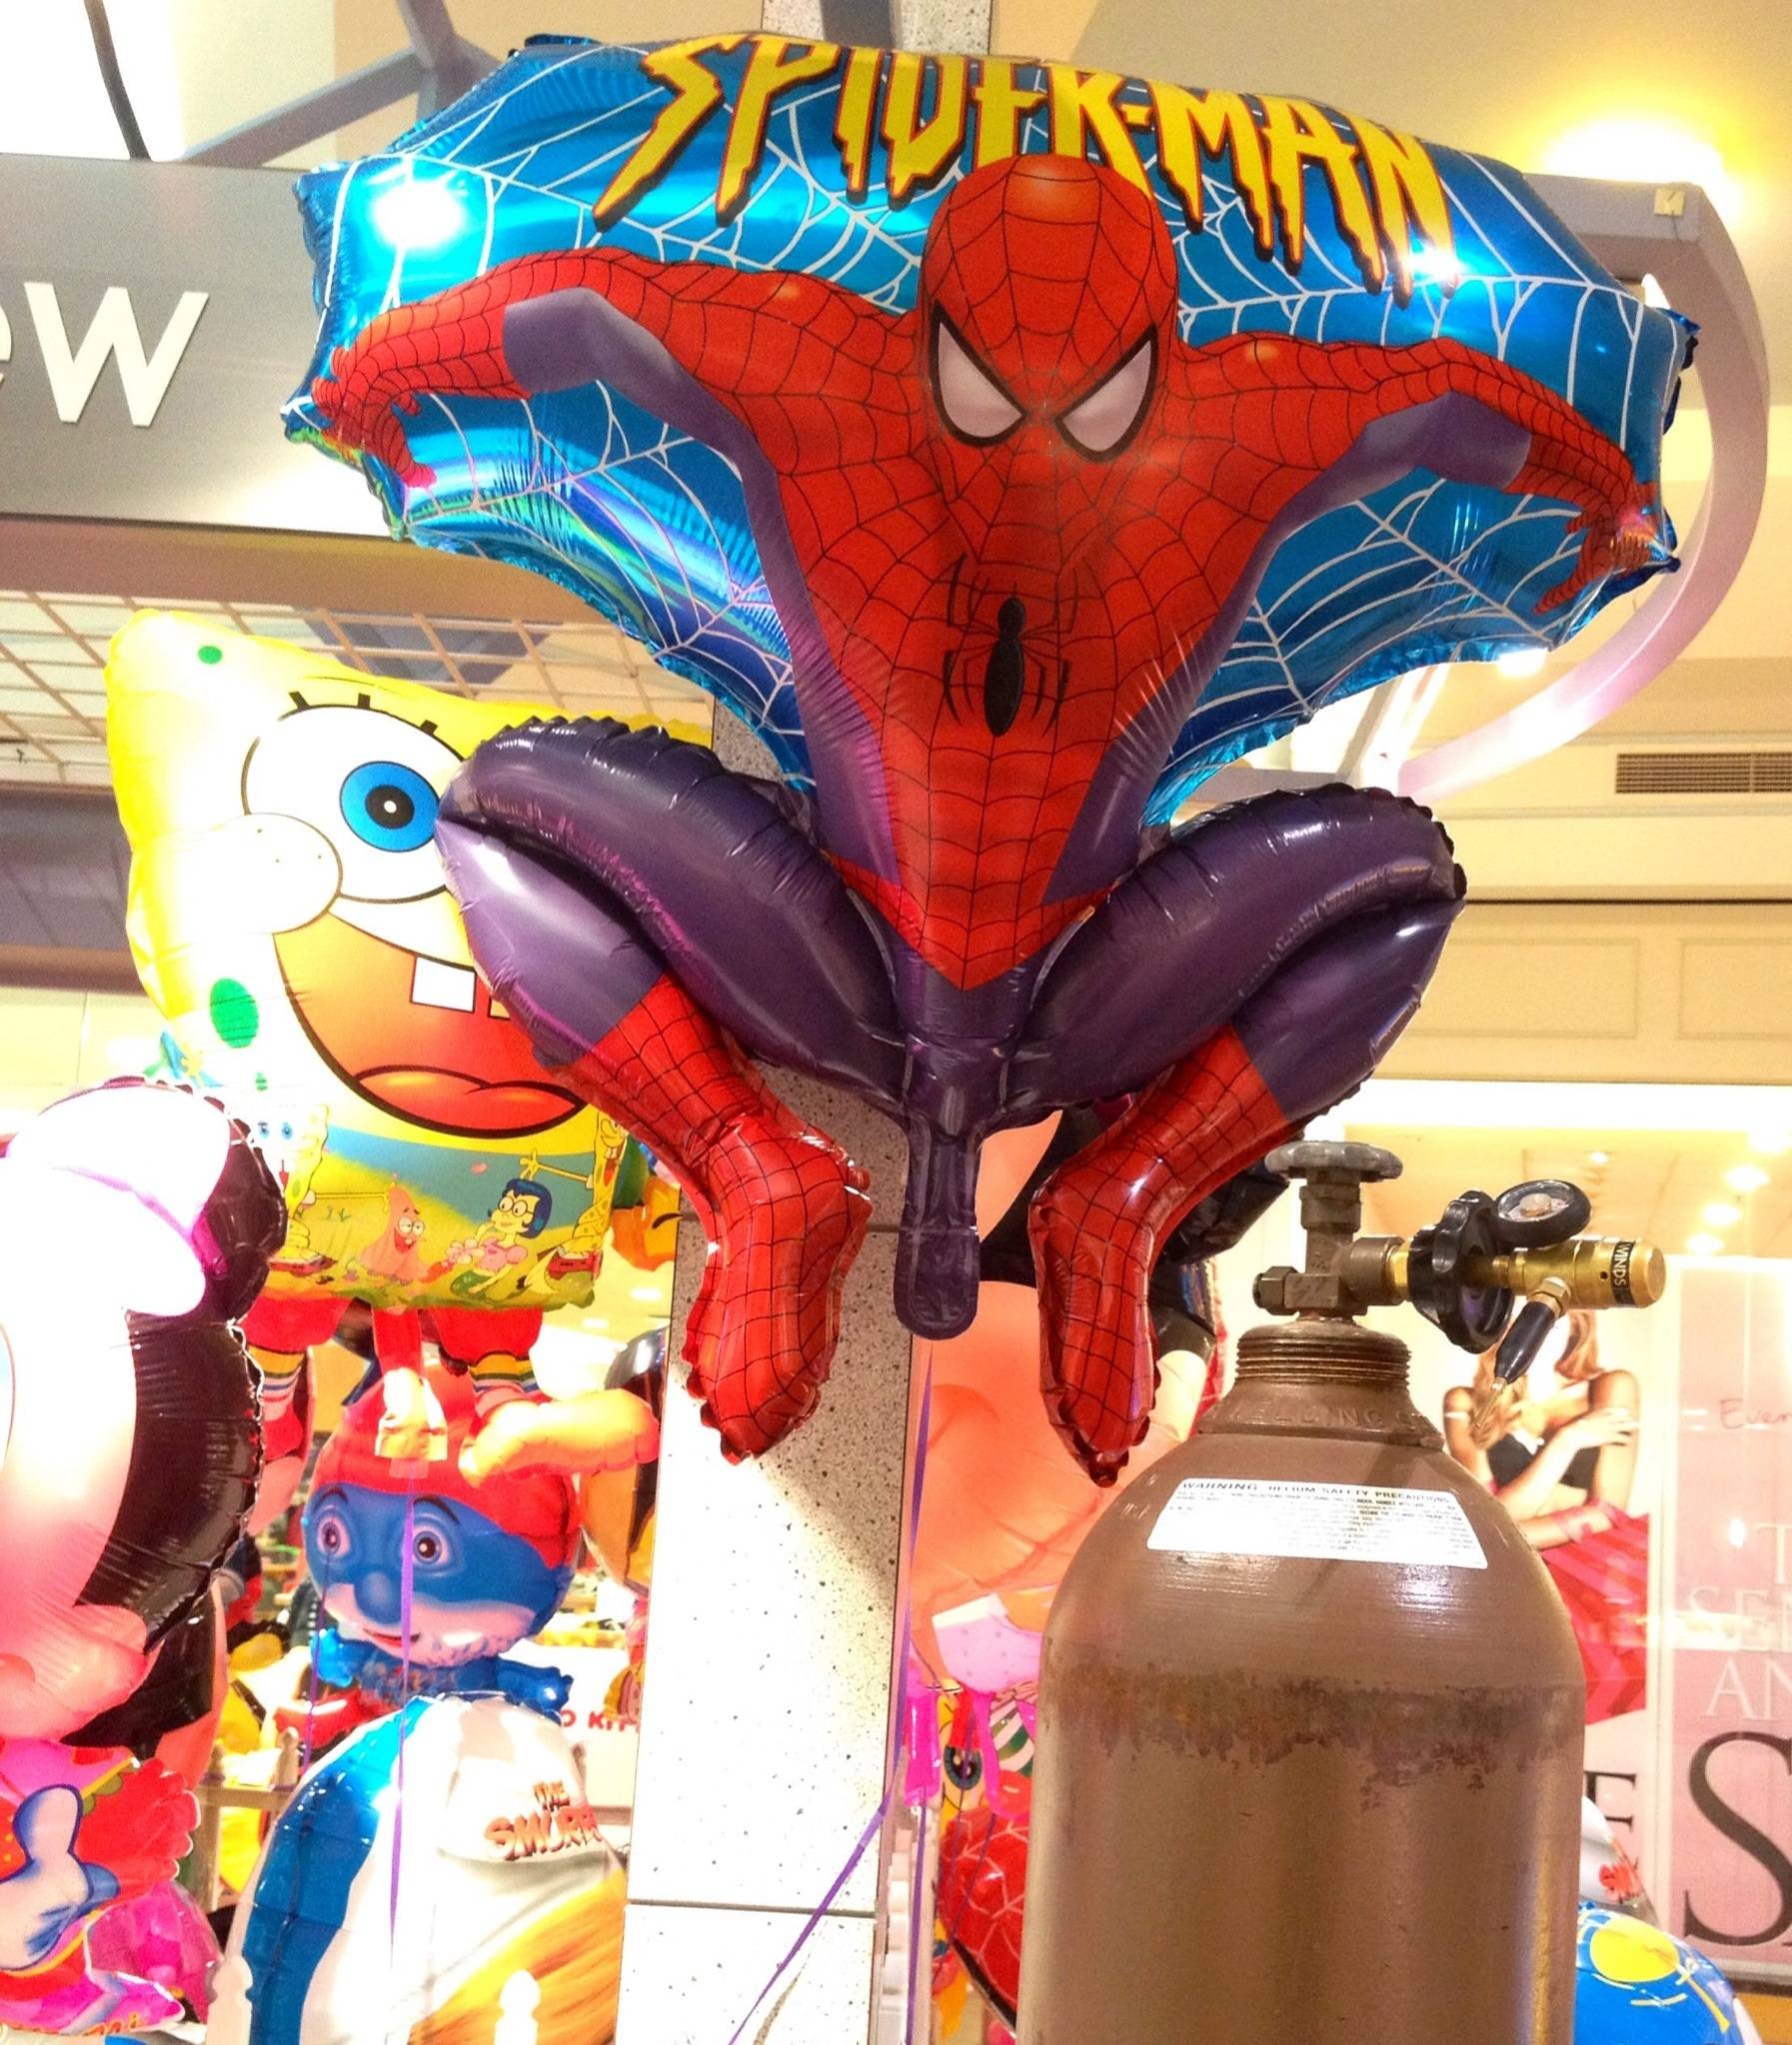 This Spiderman ballon ain't gonna blow itself.